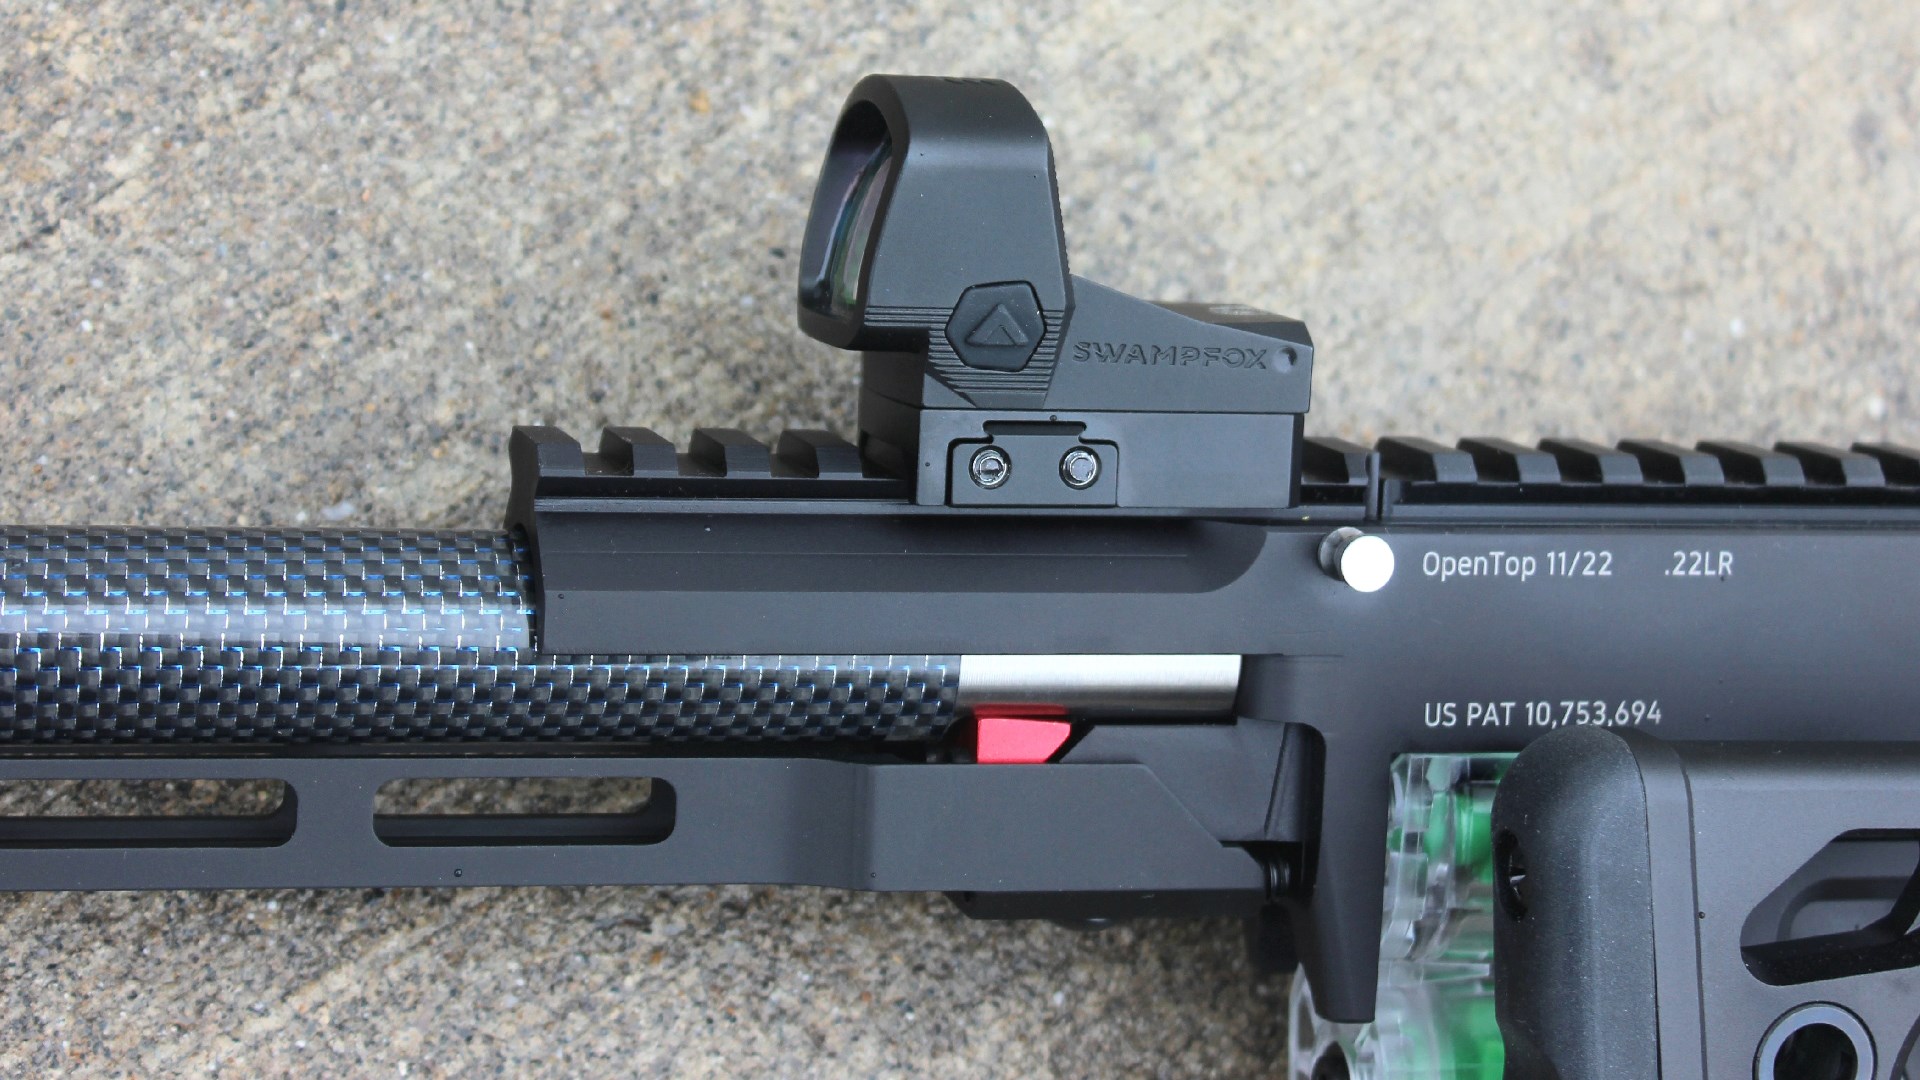 Swamp Fox Justice II red-dot optic mounted on custom rifle .22 Long Rifle